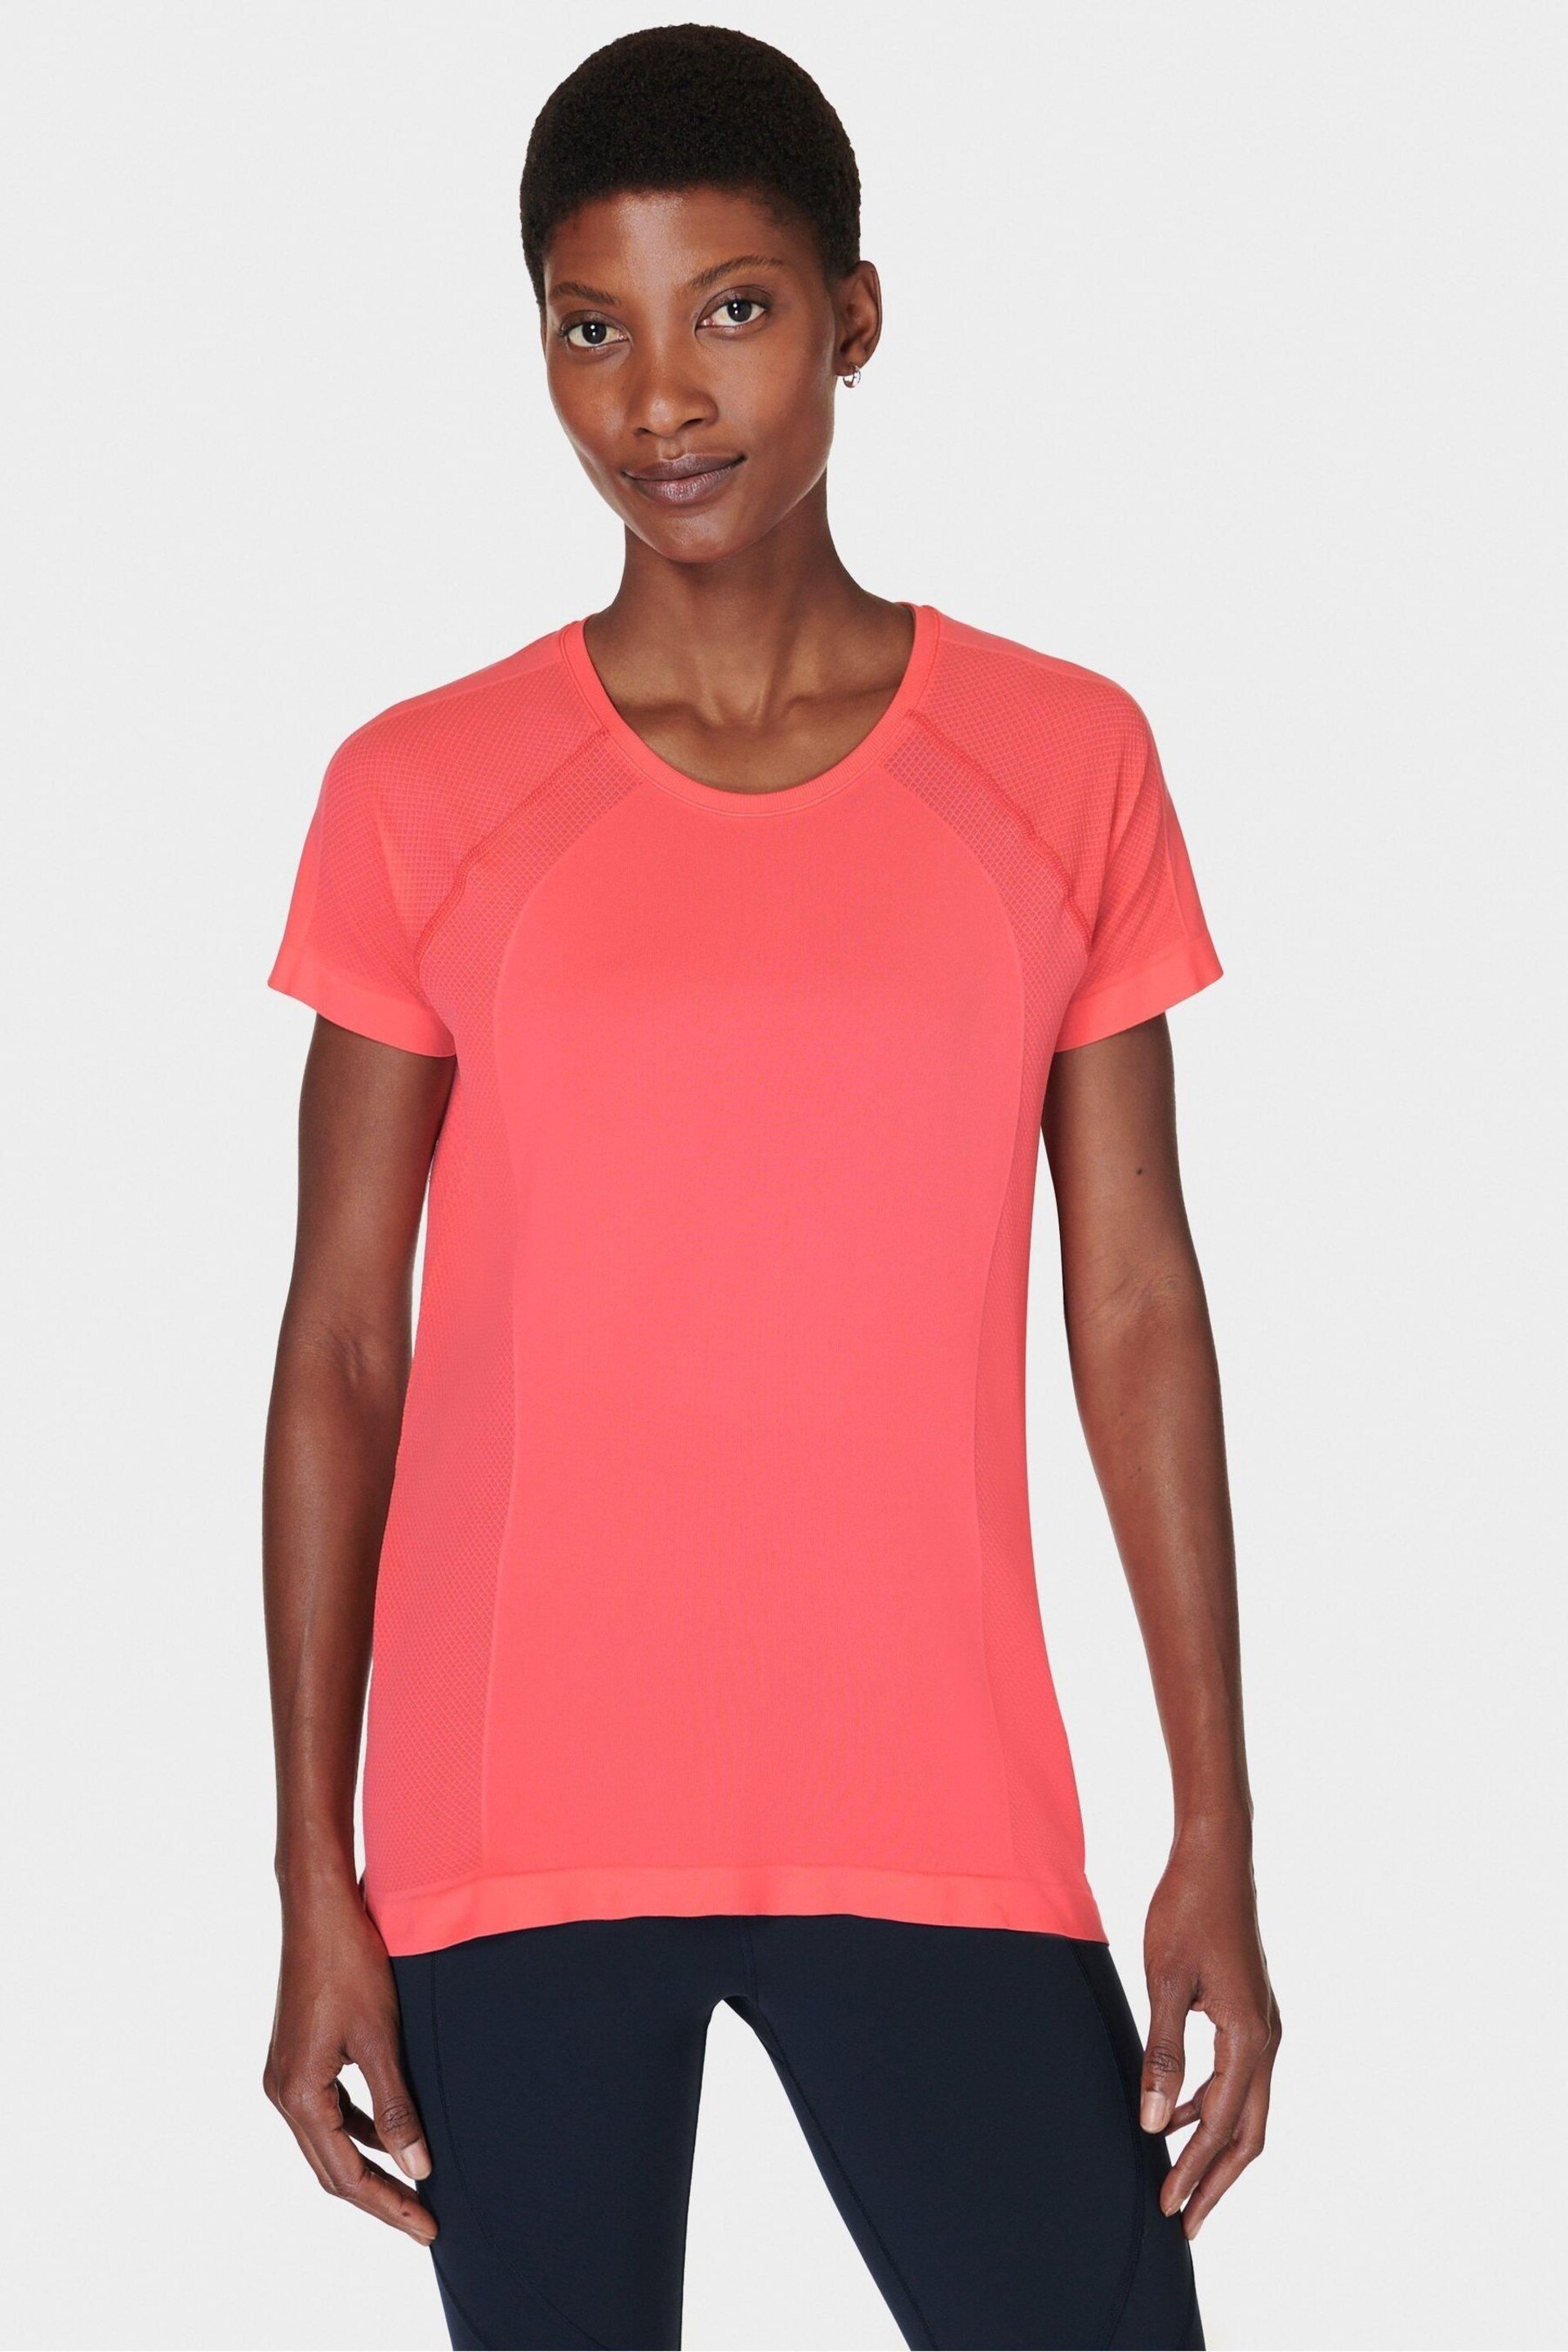 Sweaty Betty Coral Pink Athlete Seamless Featherweight T-Shirt - Image 1 of 7